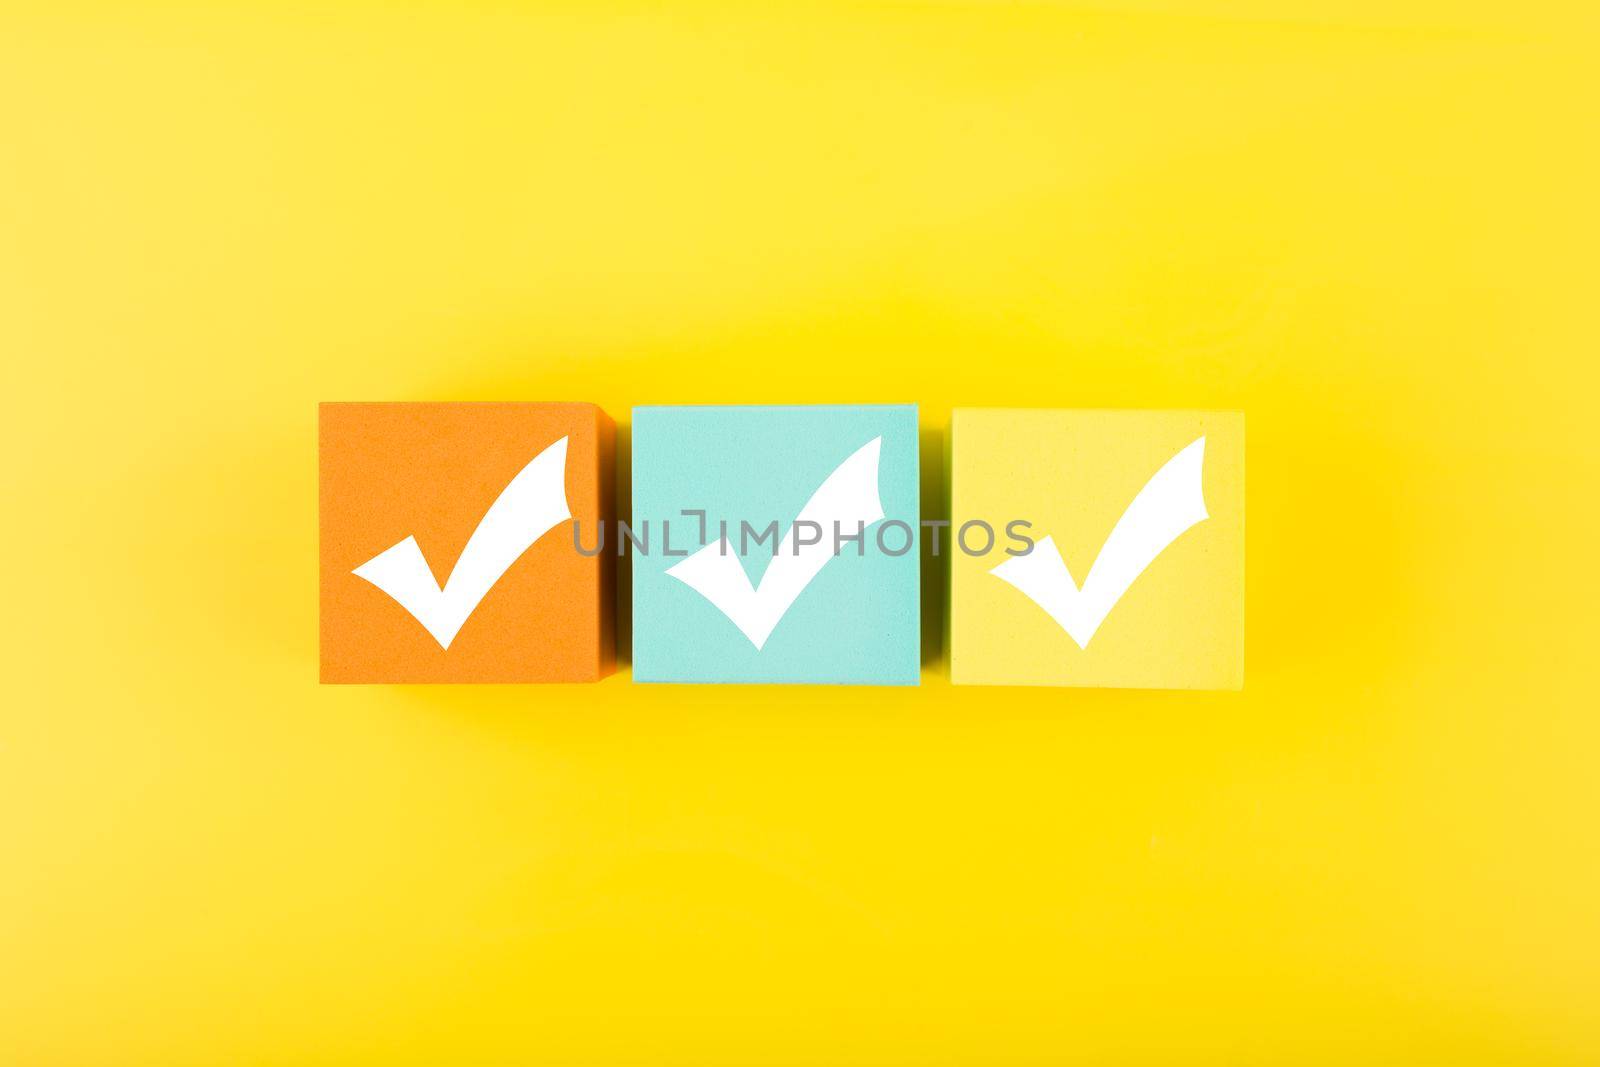 Three checkmarks on colorful blocks against bright yellow background by Senorina_Irina